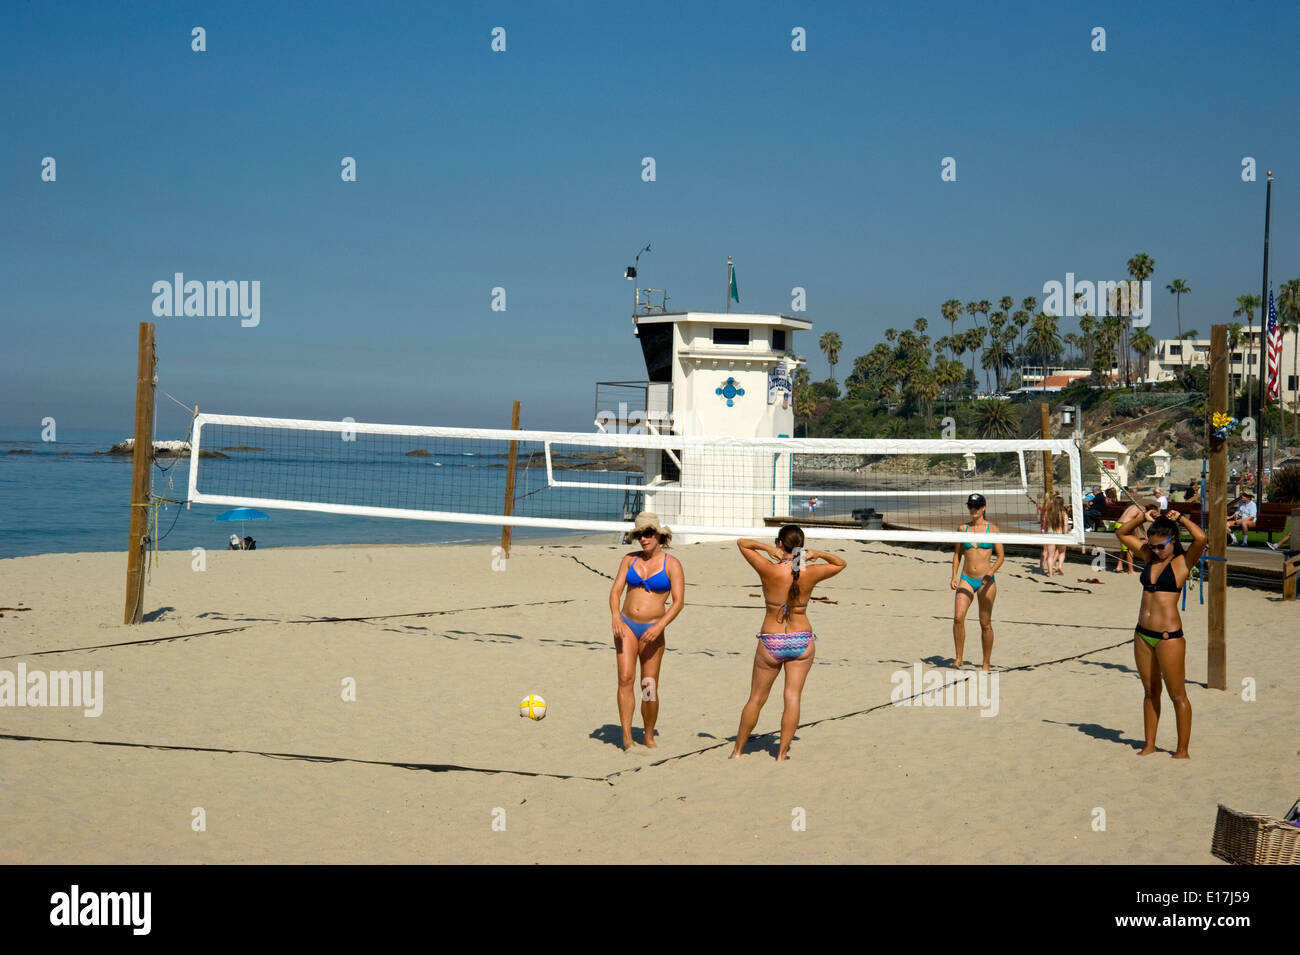 Volleyball courts at Main Beach in Laguna Beach, California Stock Photo